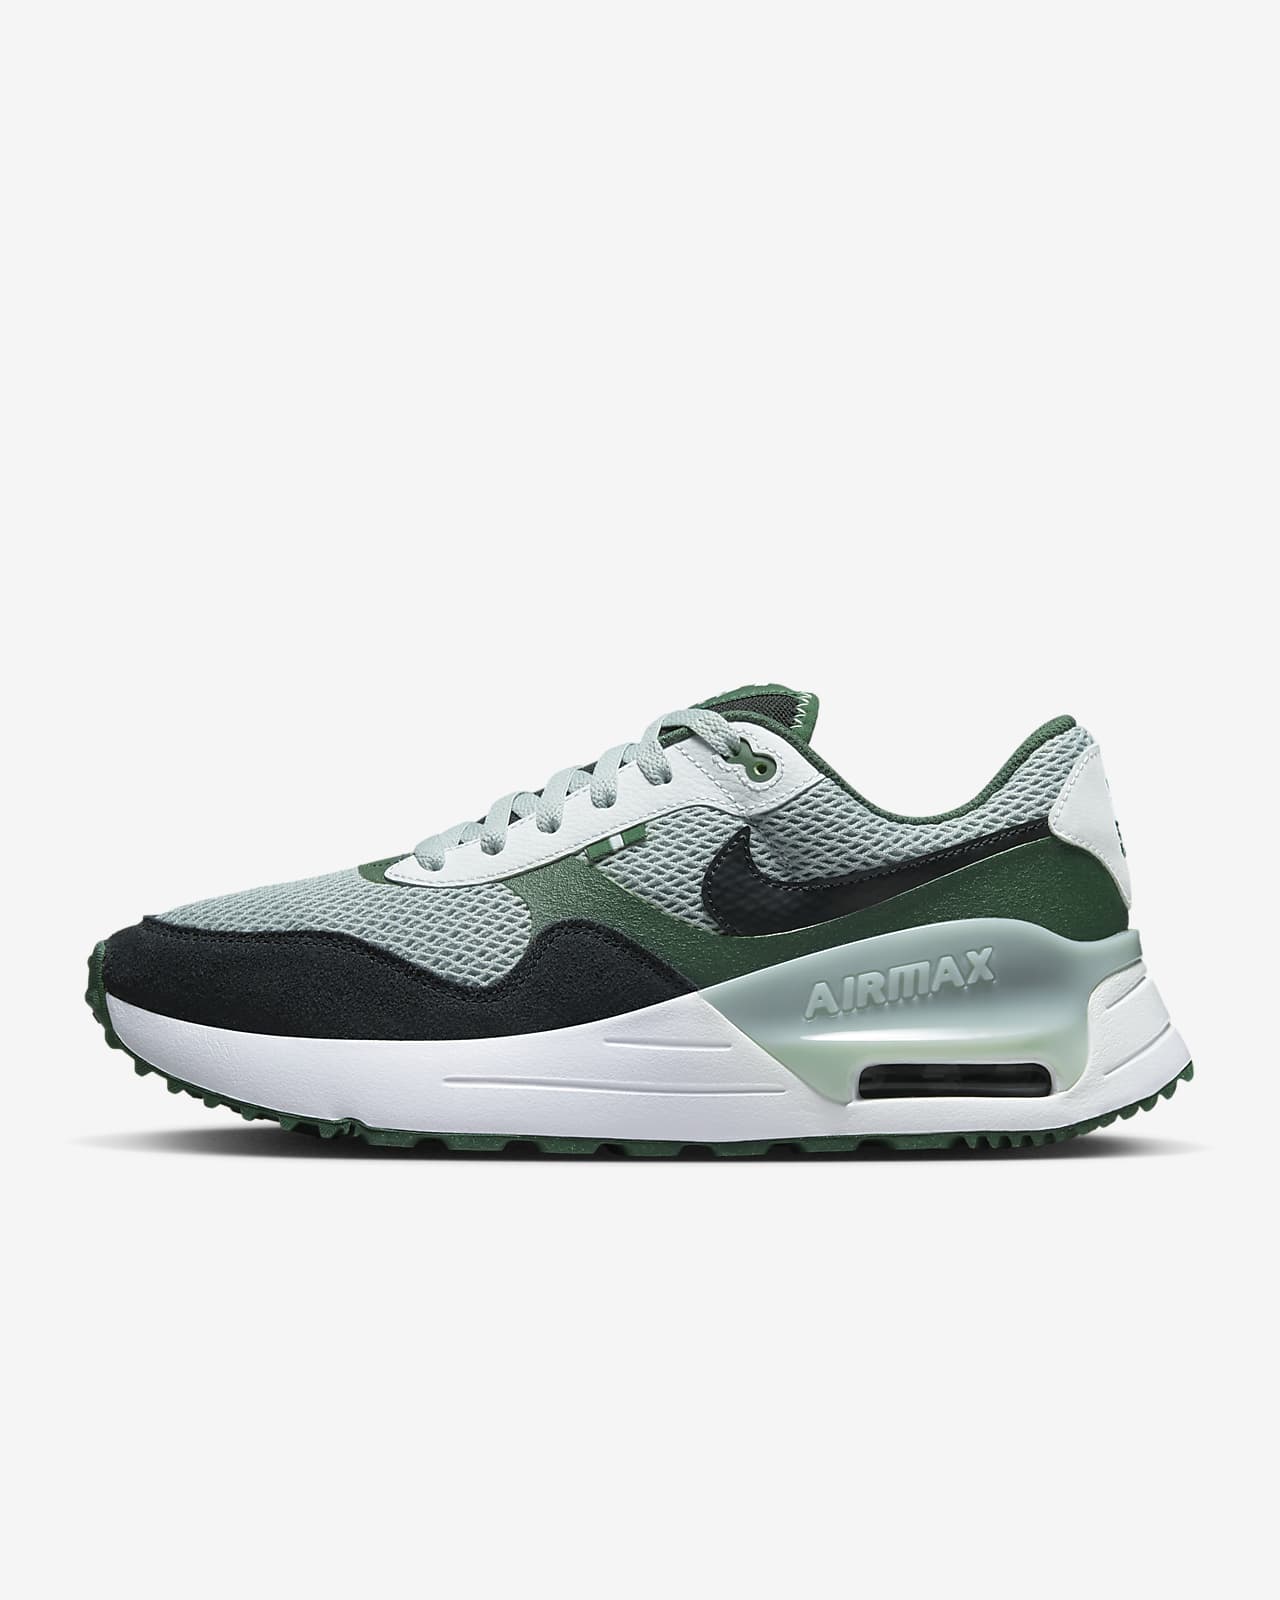 Green Nike Shoes 